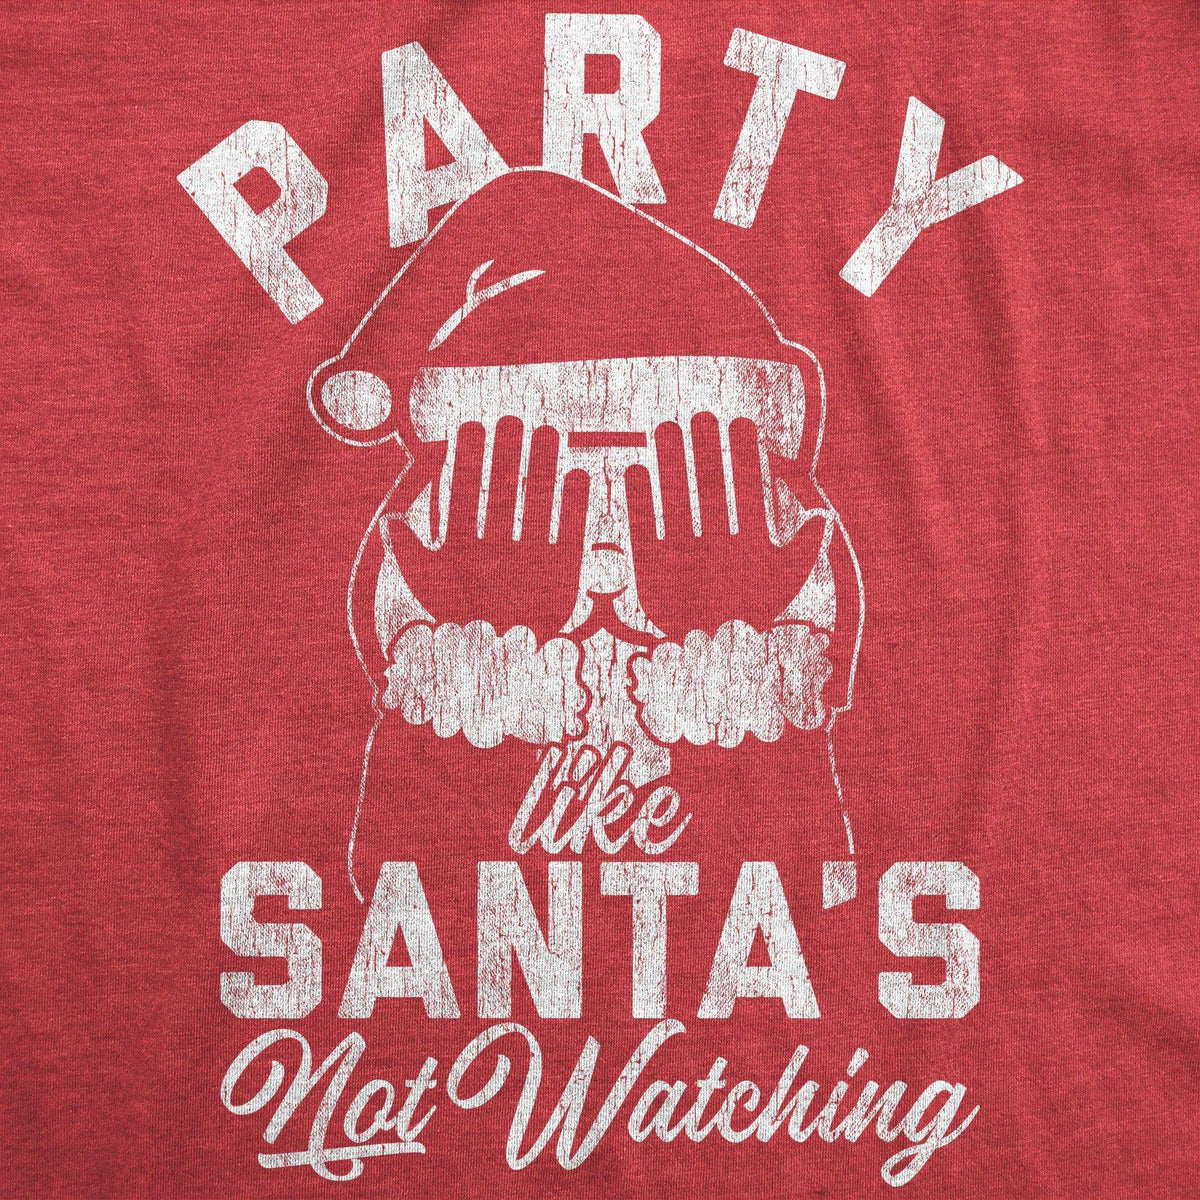 Party Like Santa&#39;s Not Watching Men&#39;s Tshirt - Crazy Dog T-Shirts